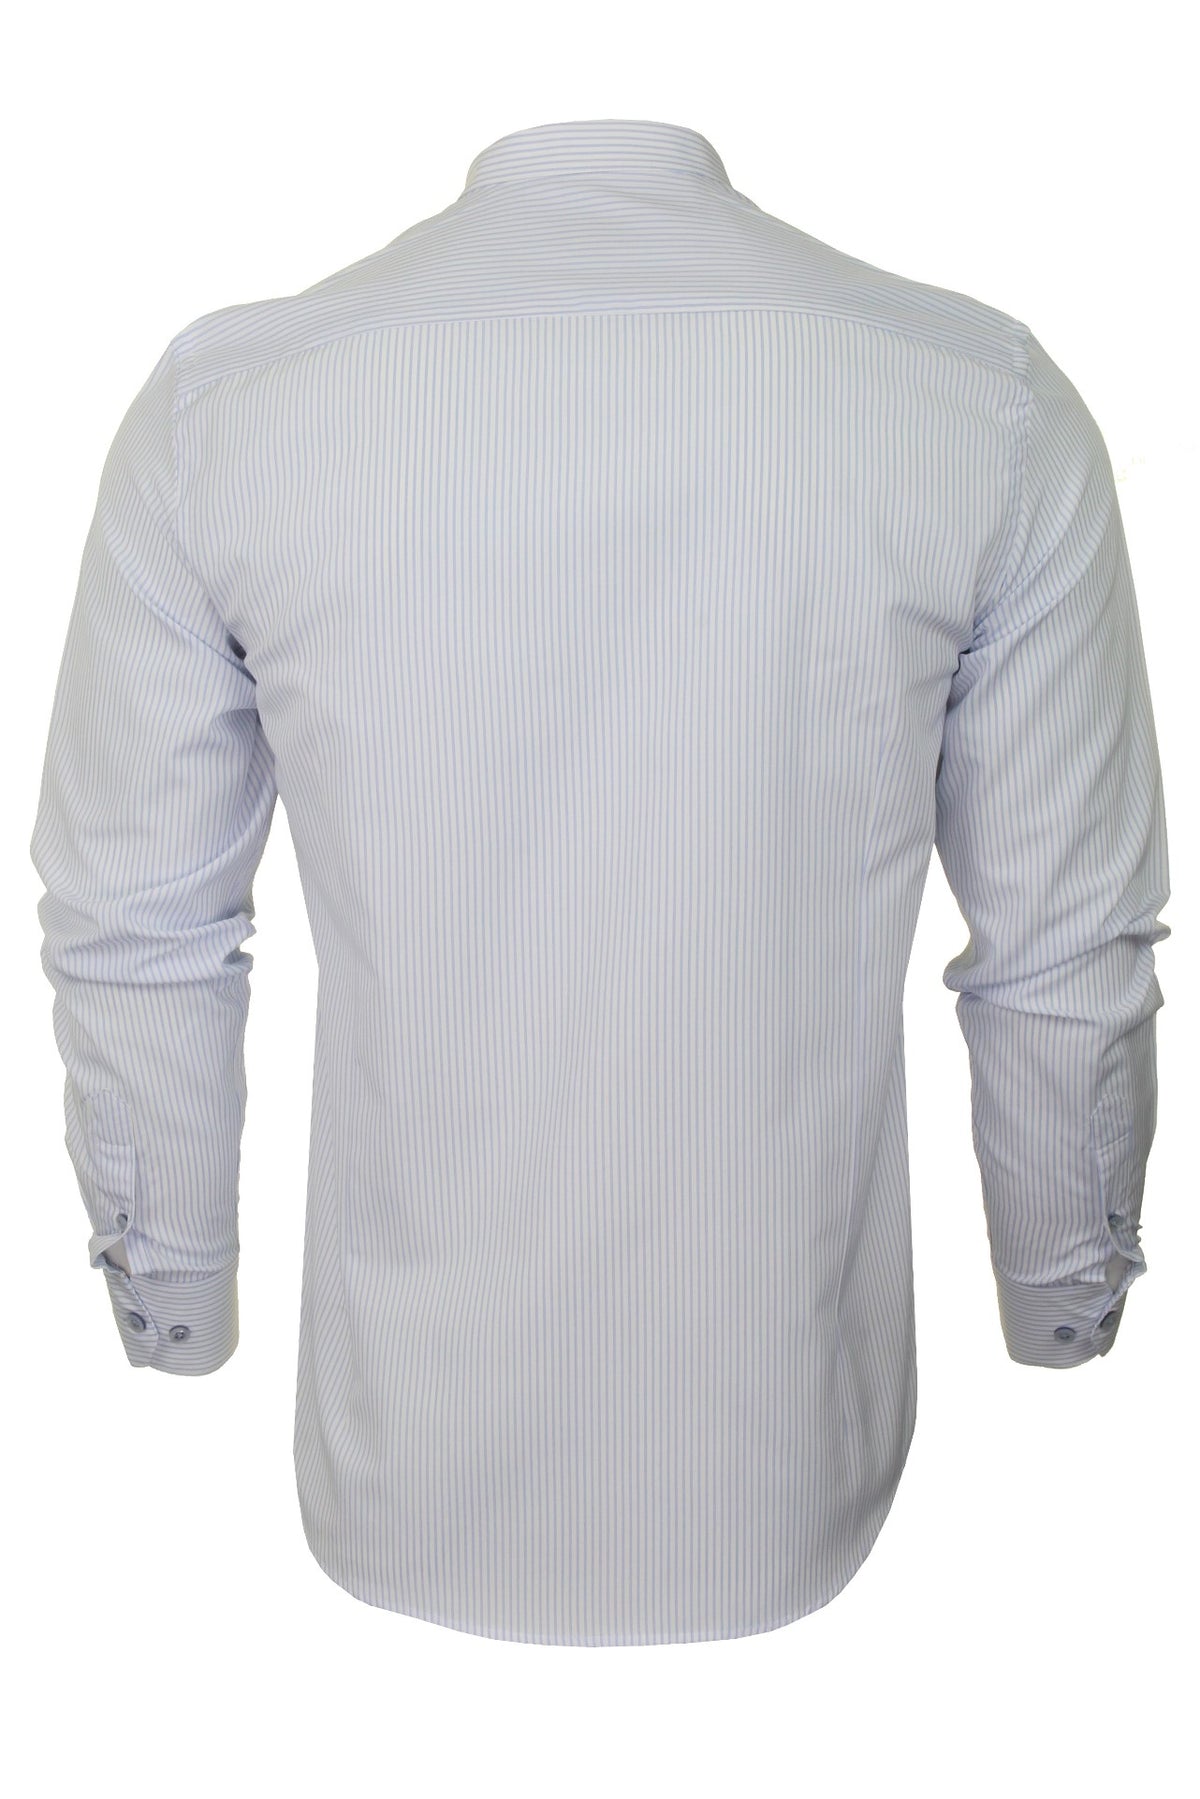 Xact Mens Stripe Grandad Shirt - Long Sleeved, 03, Xsh1078, Light Blue Stripe